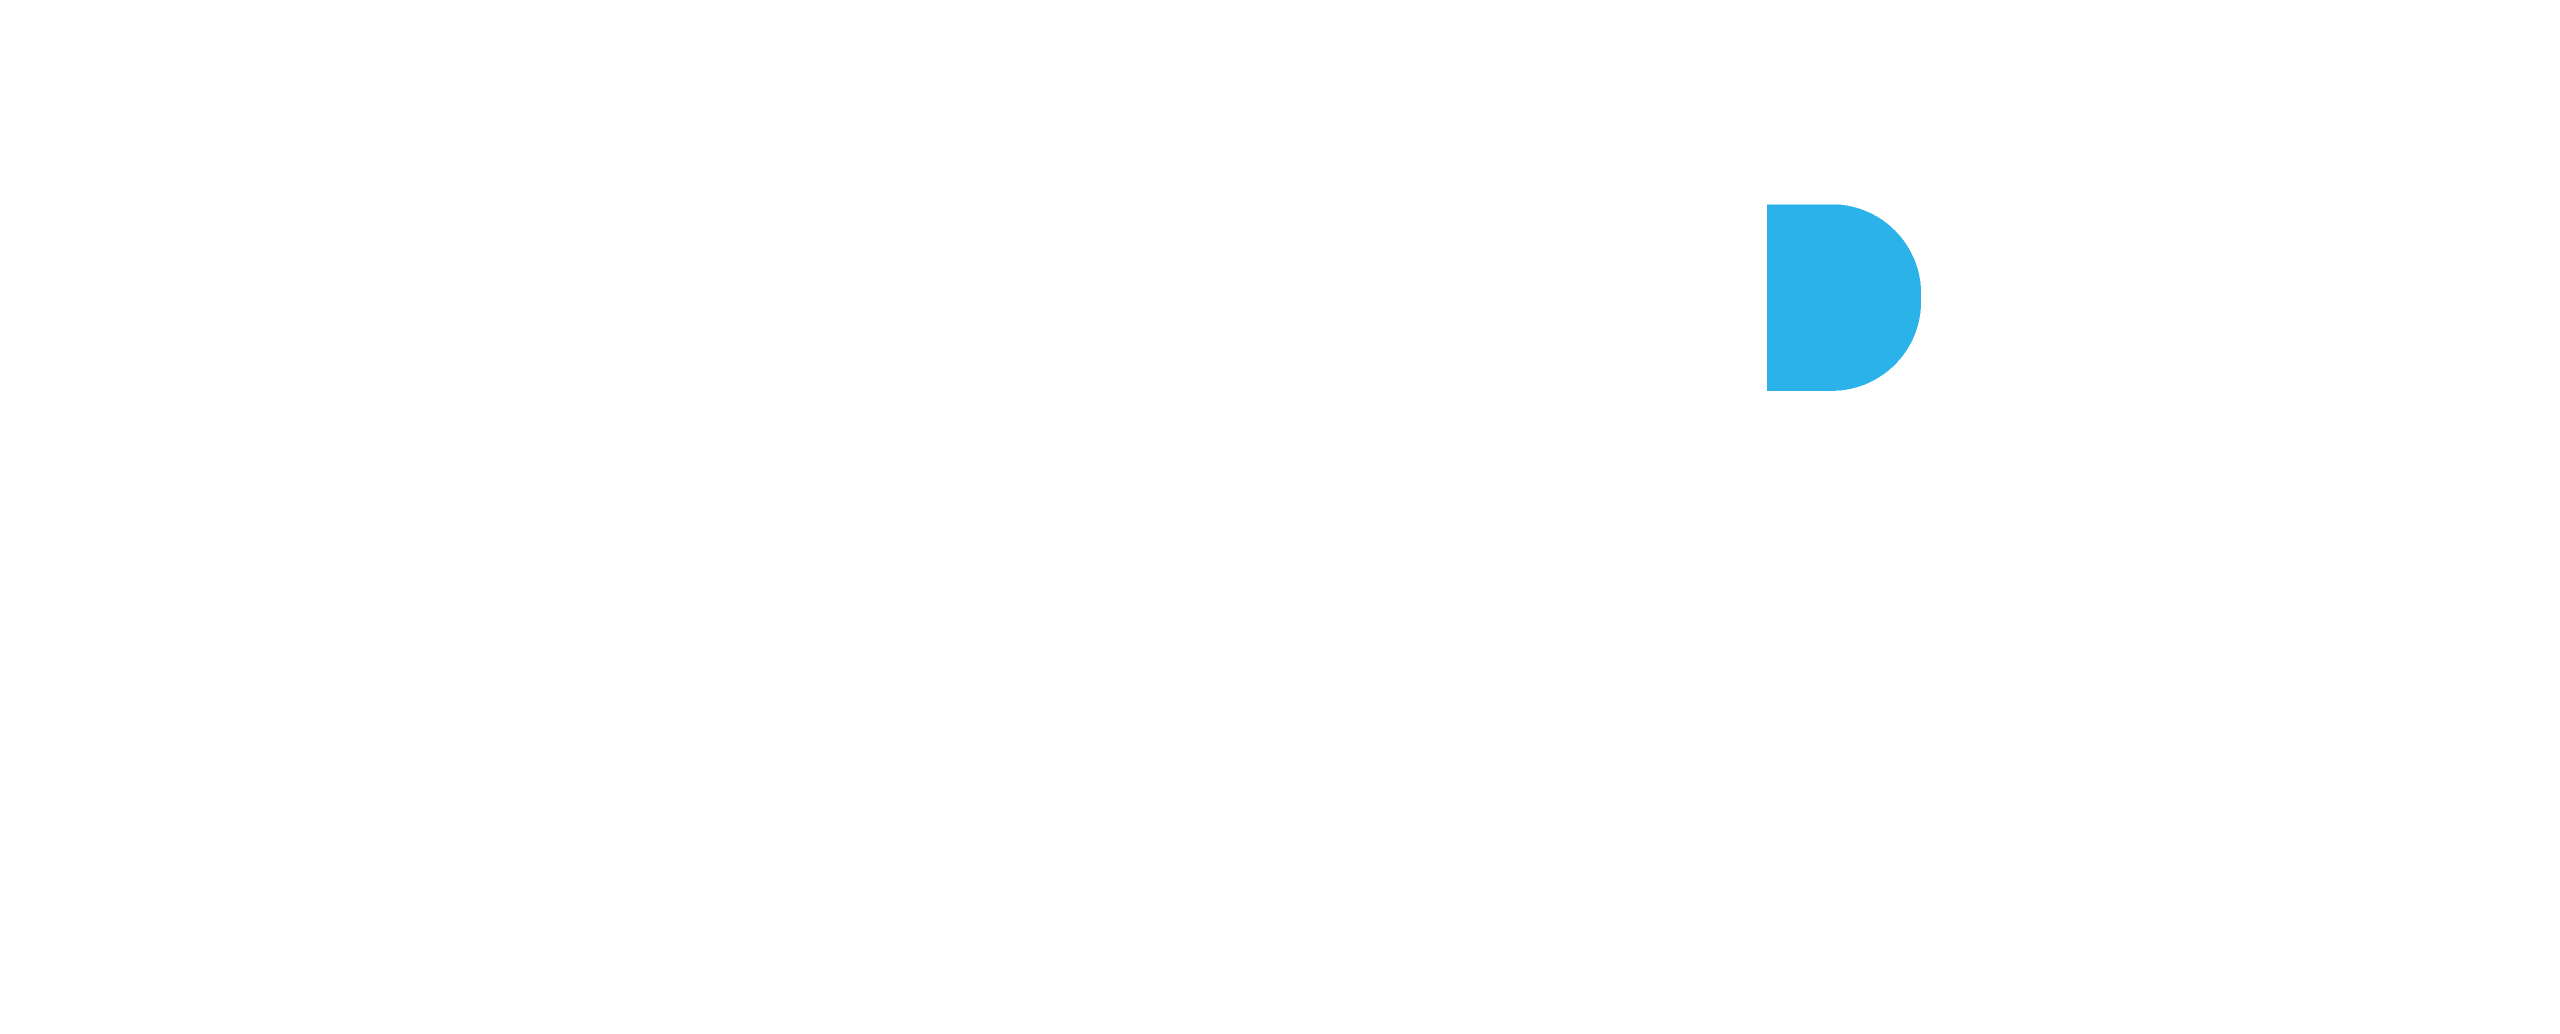 A-VIVID STUDIO公式サイト | 宮城県 仙台市 タレント コスプレ スタジオ 撮影会